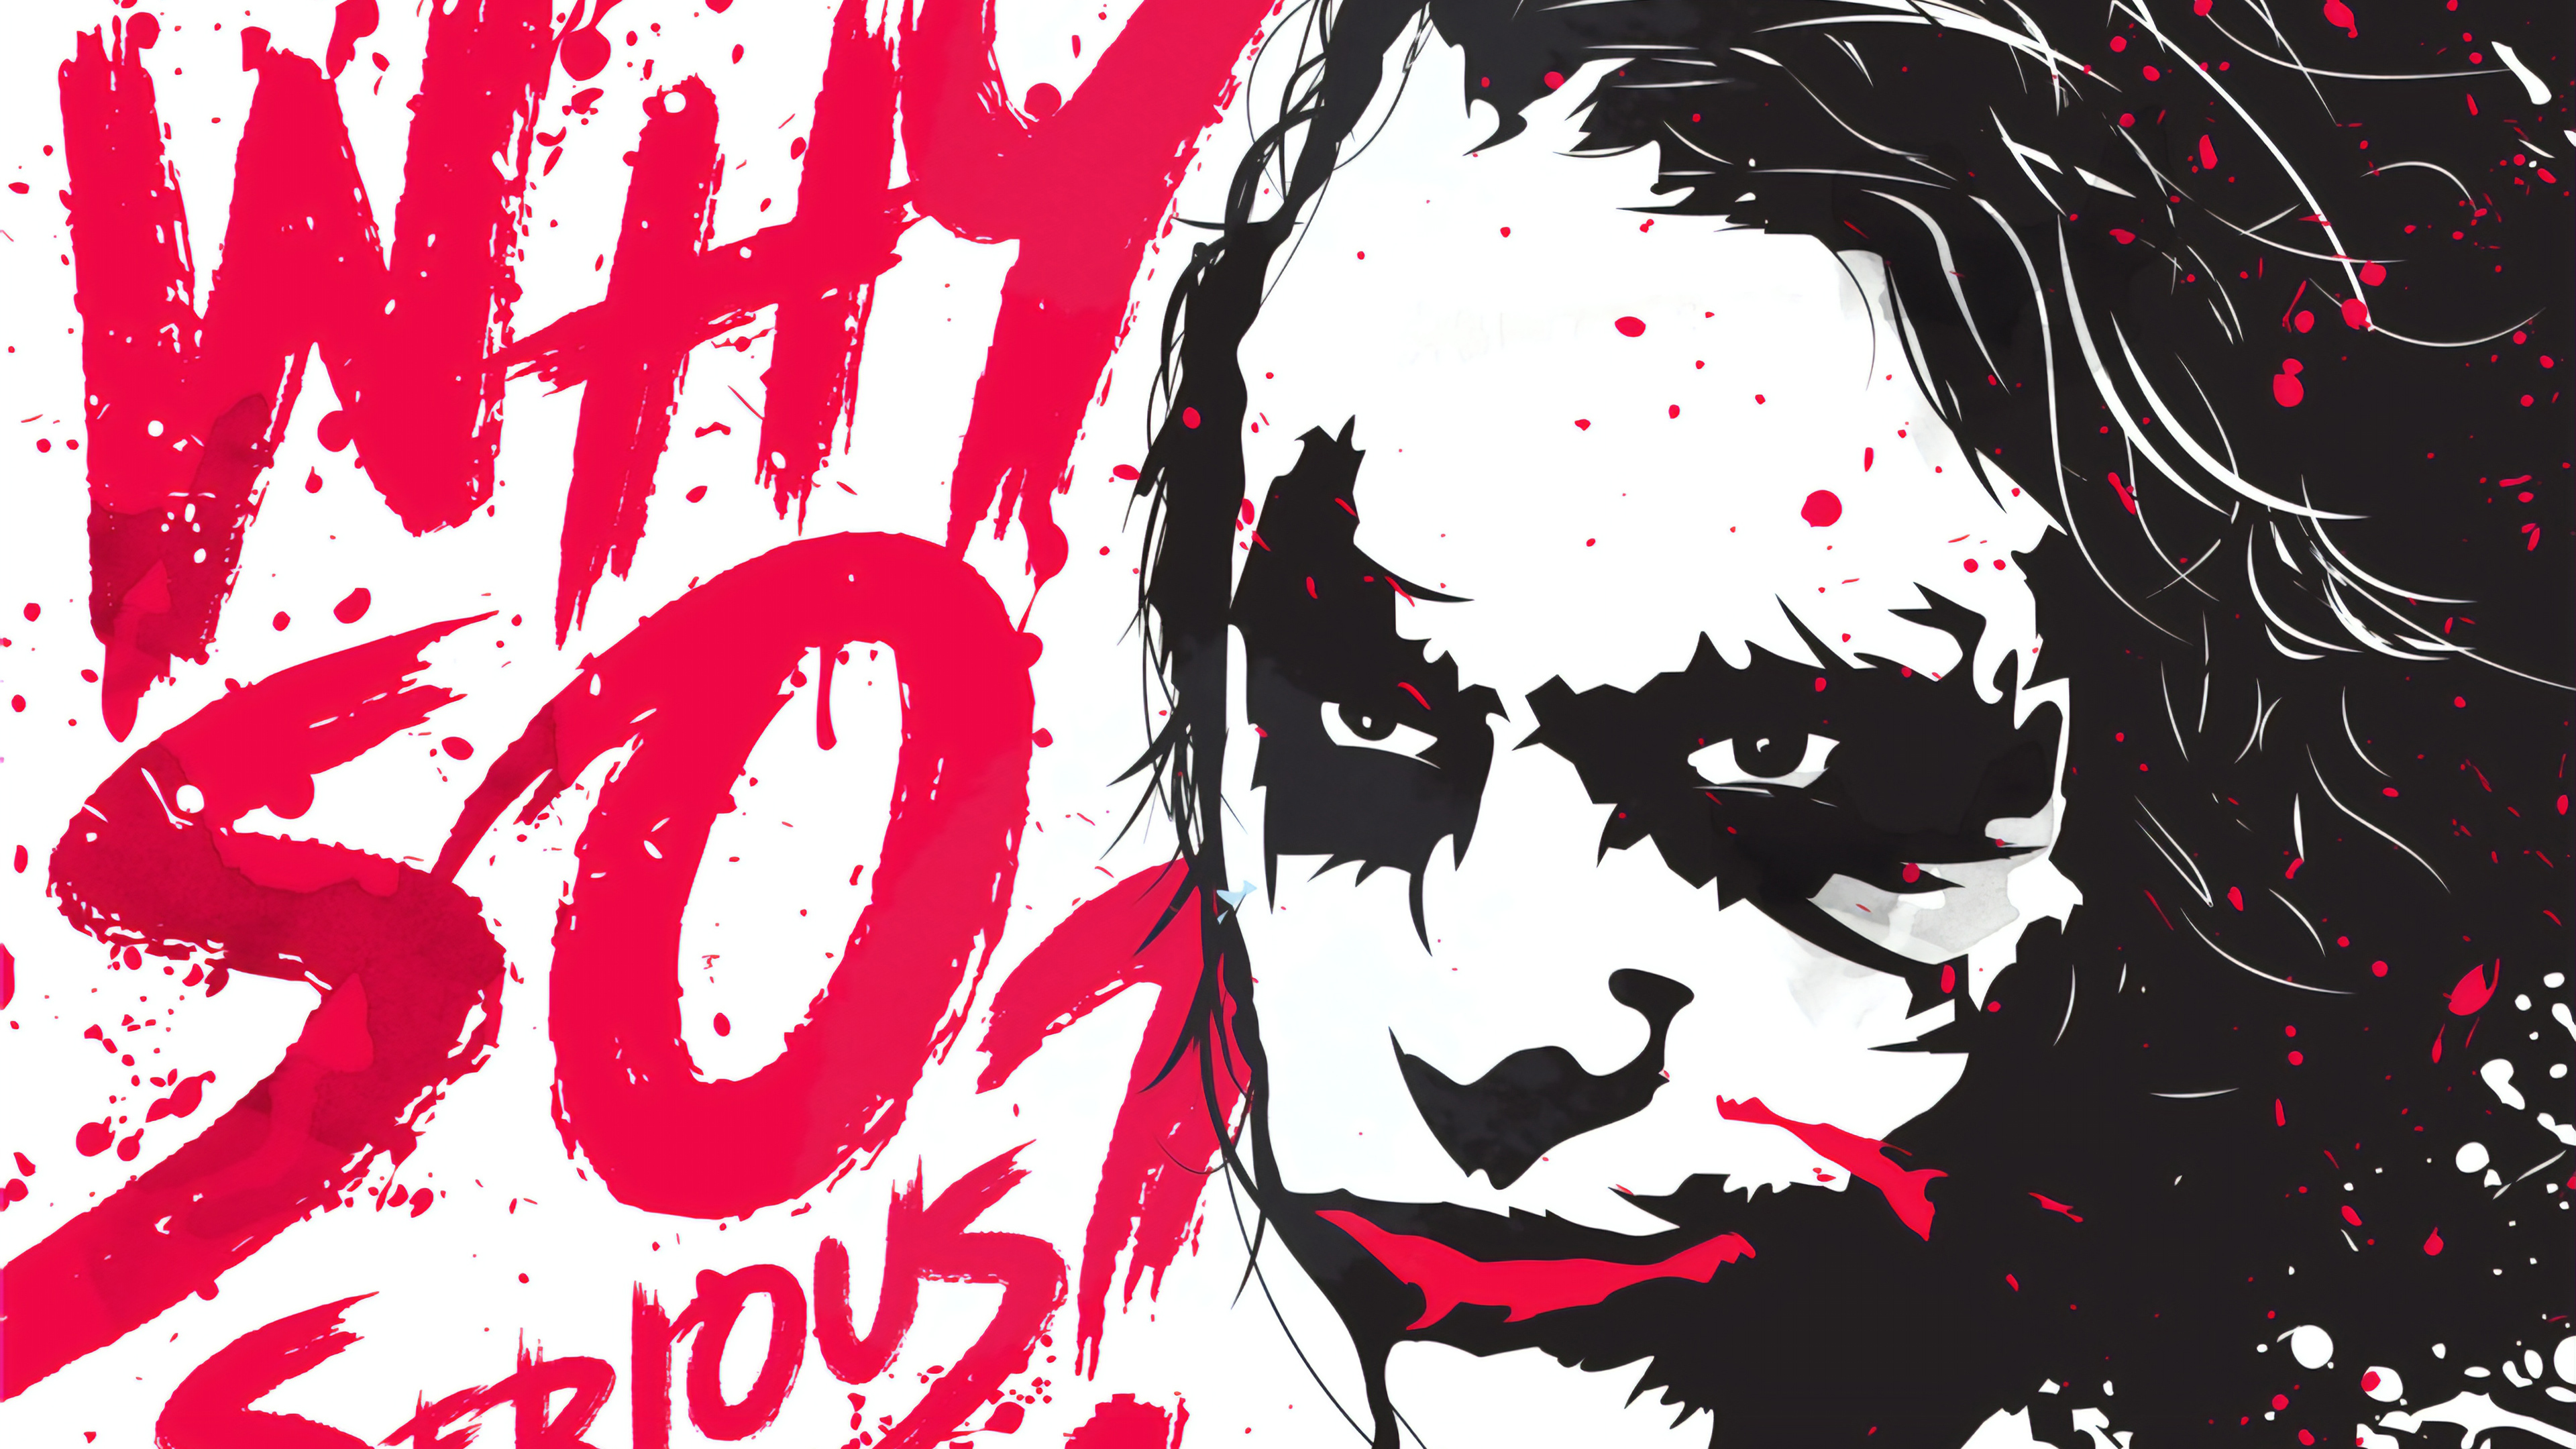 Carmocrat Heath Ledger  Joker  Why So Serious Poster 3048 cm x 4572  cm  Amazonin Home  Kitchen